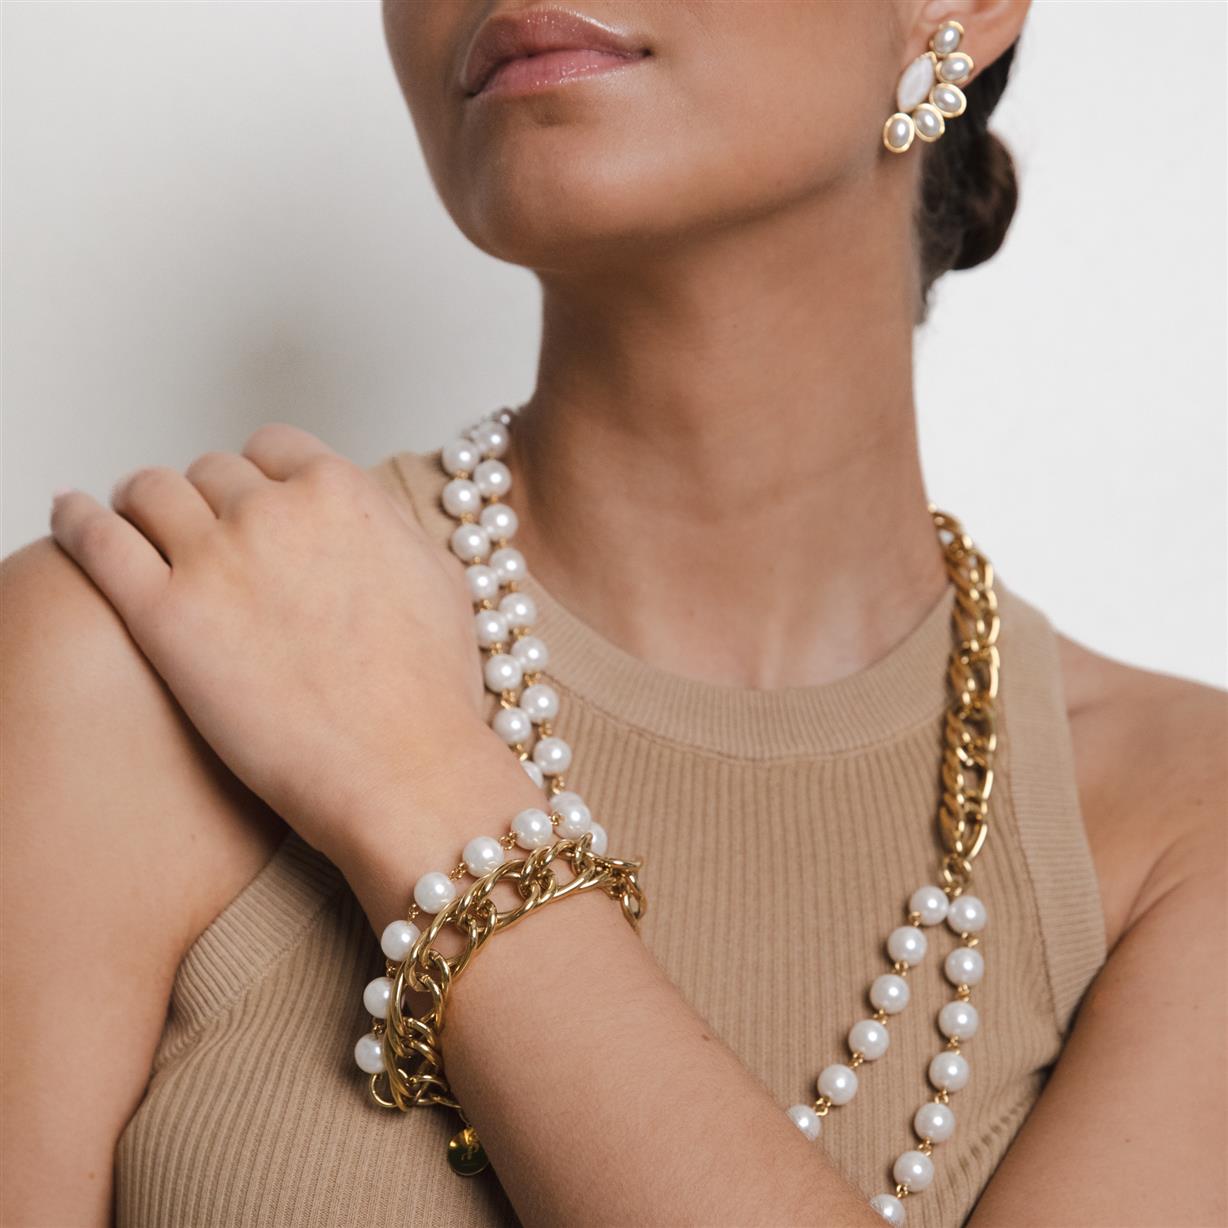 Small snake chain & pearls bracelet